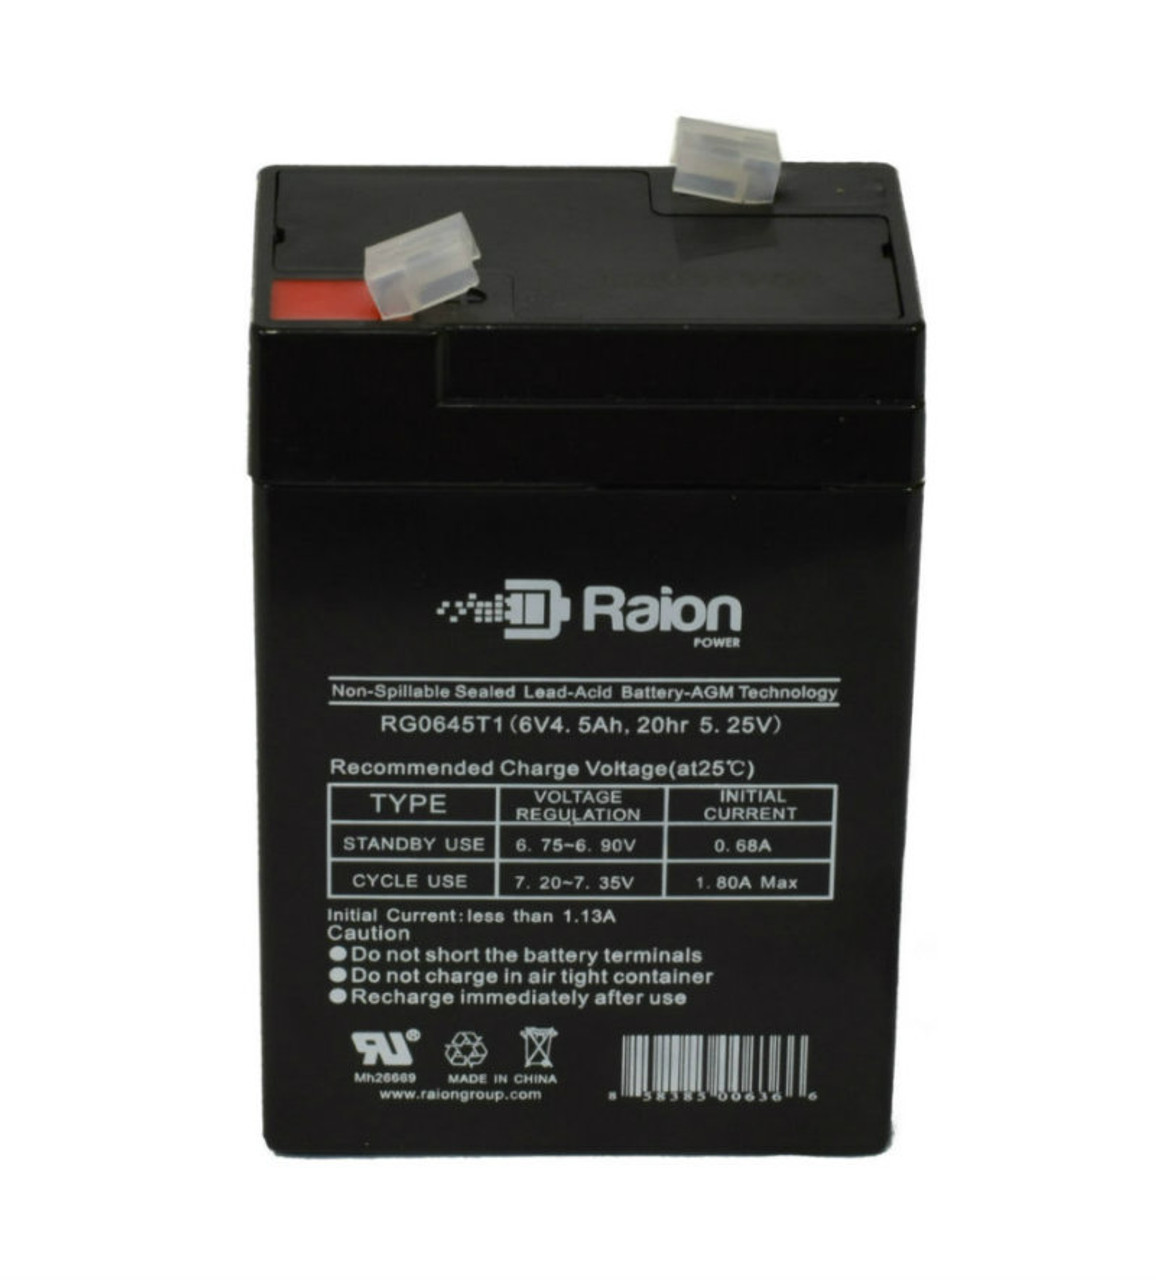 Raion Power RG0645T1 Replacement Battery Cartridge for Wangpin 3FM5.5